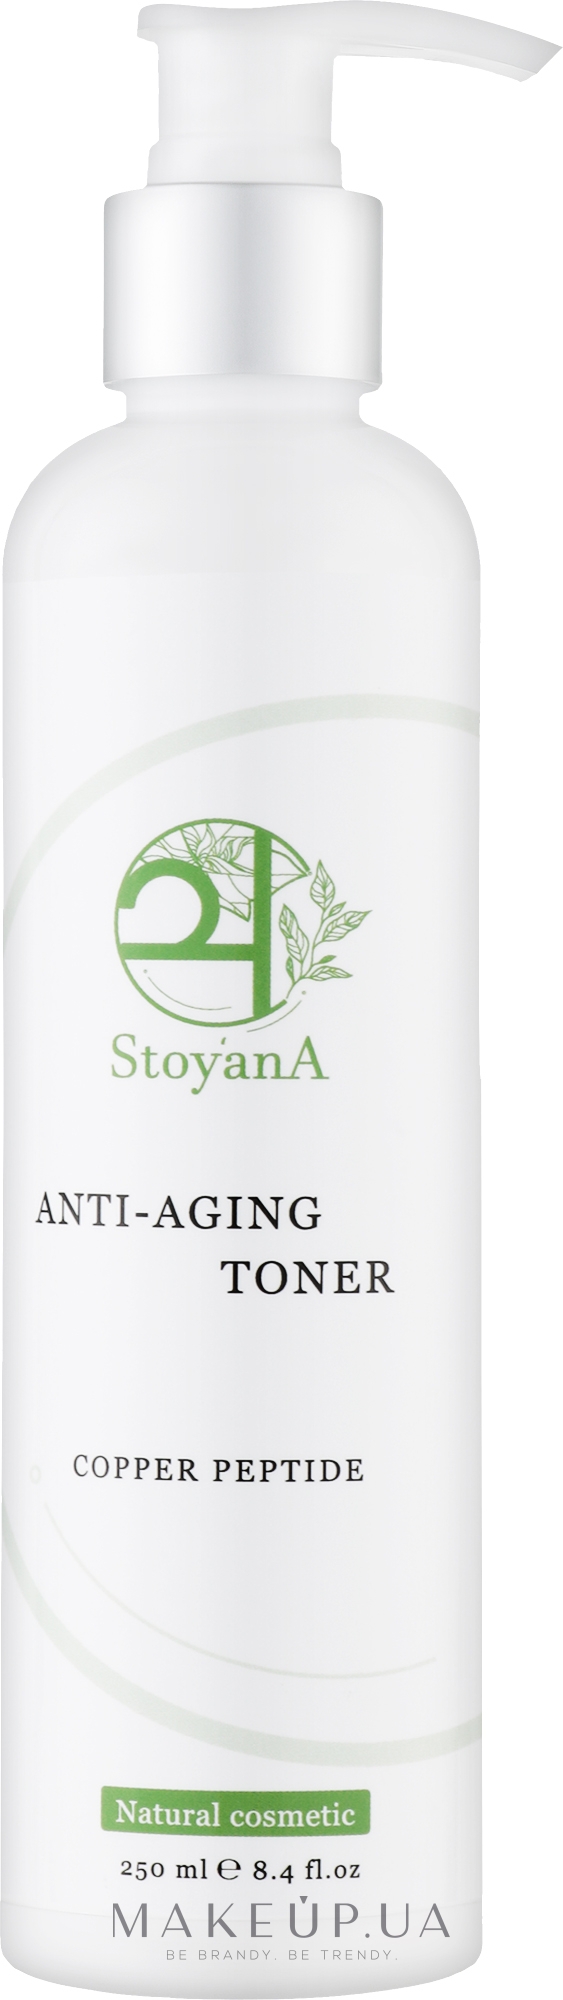 Антивозрастной тонер для очистки лица с пептидом - StoyanA Anti-Aging Toner Copper Peptide — фото 250ml